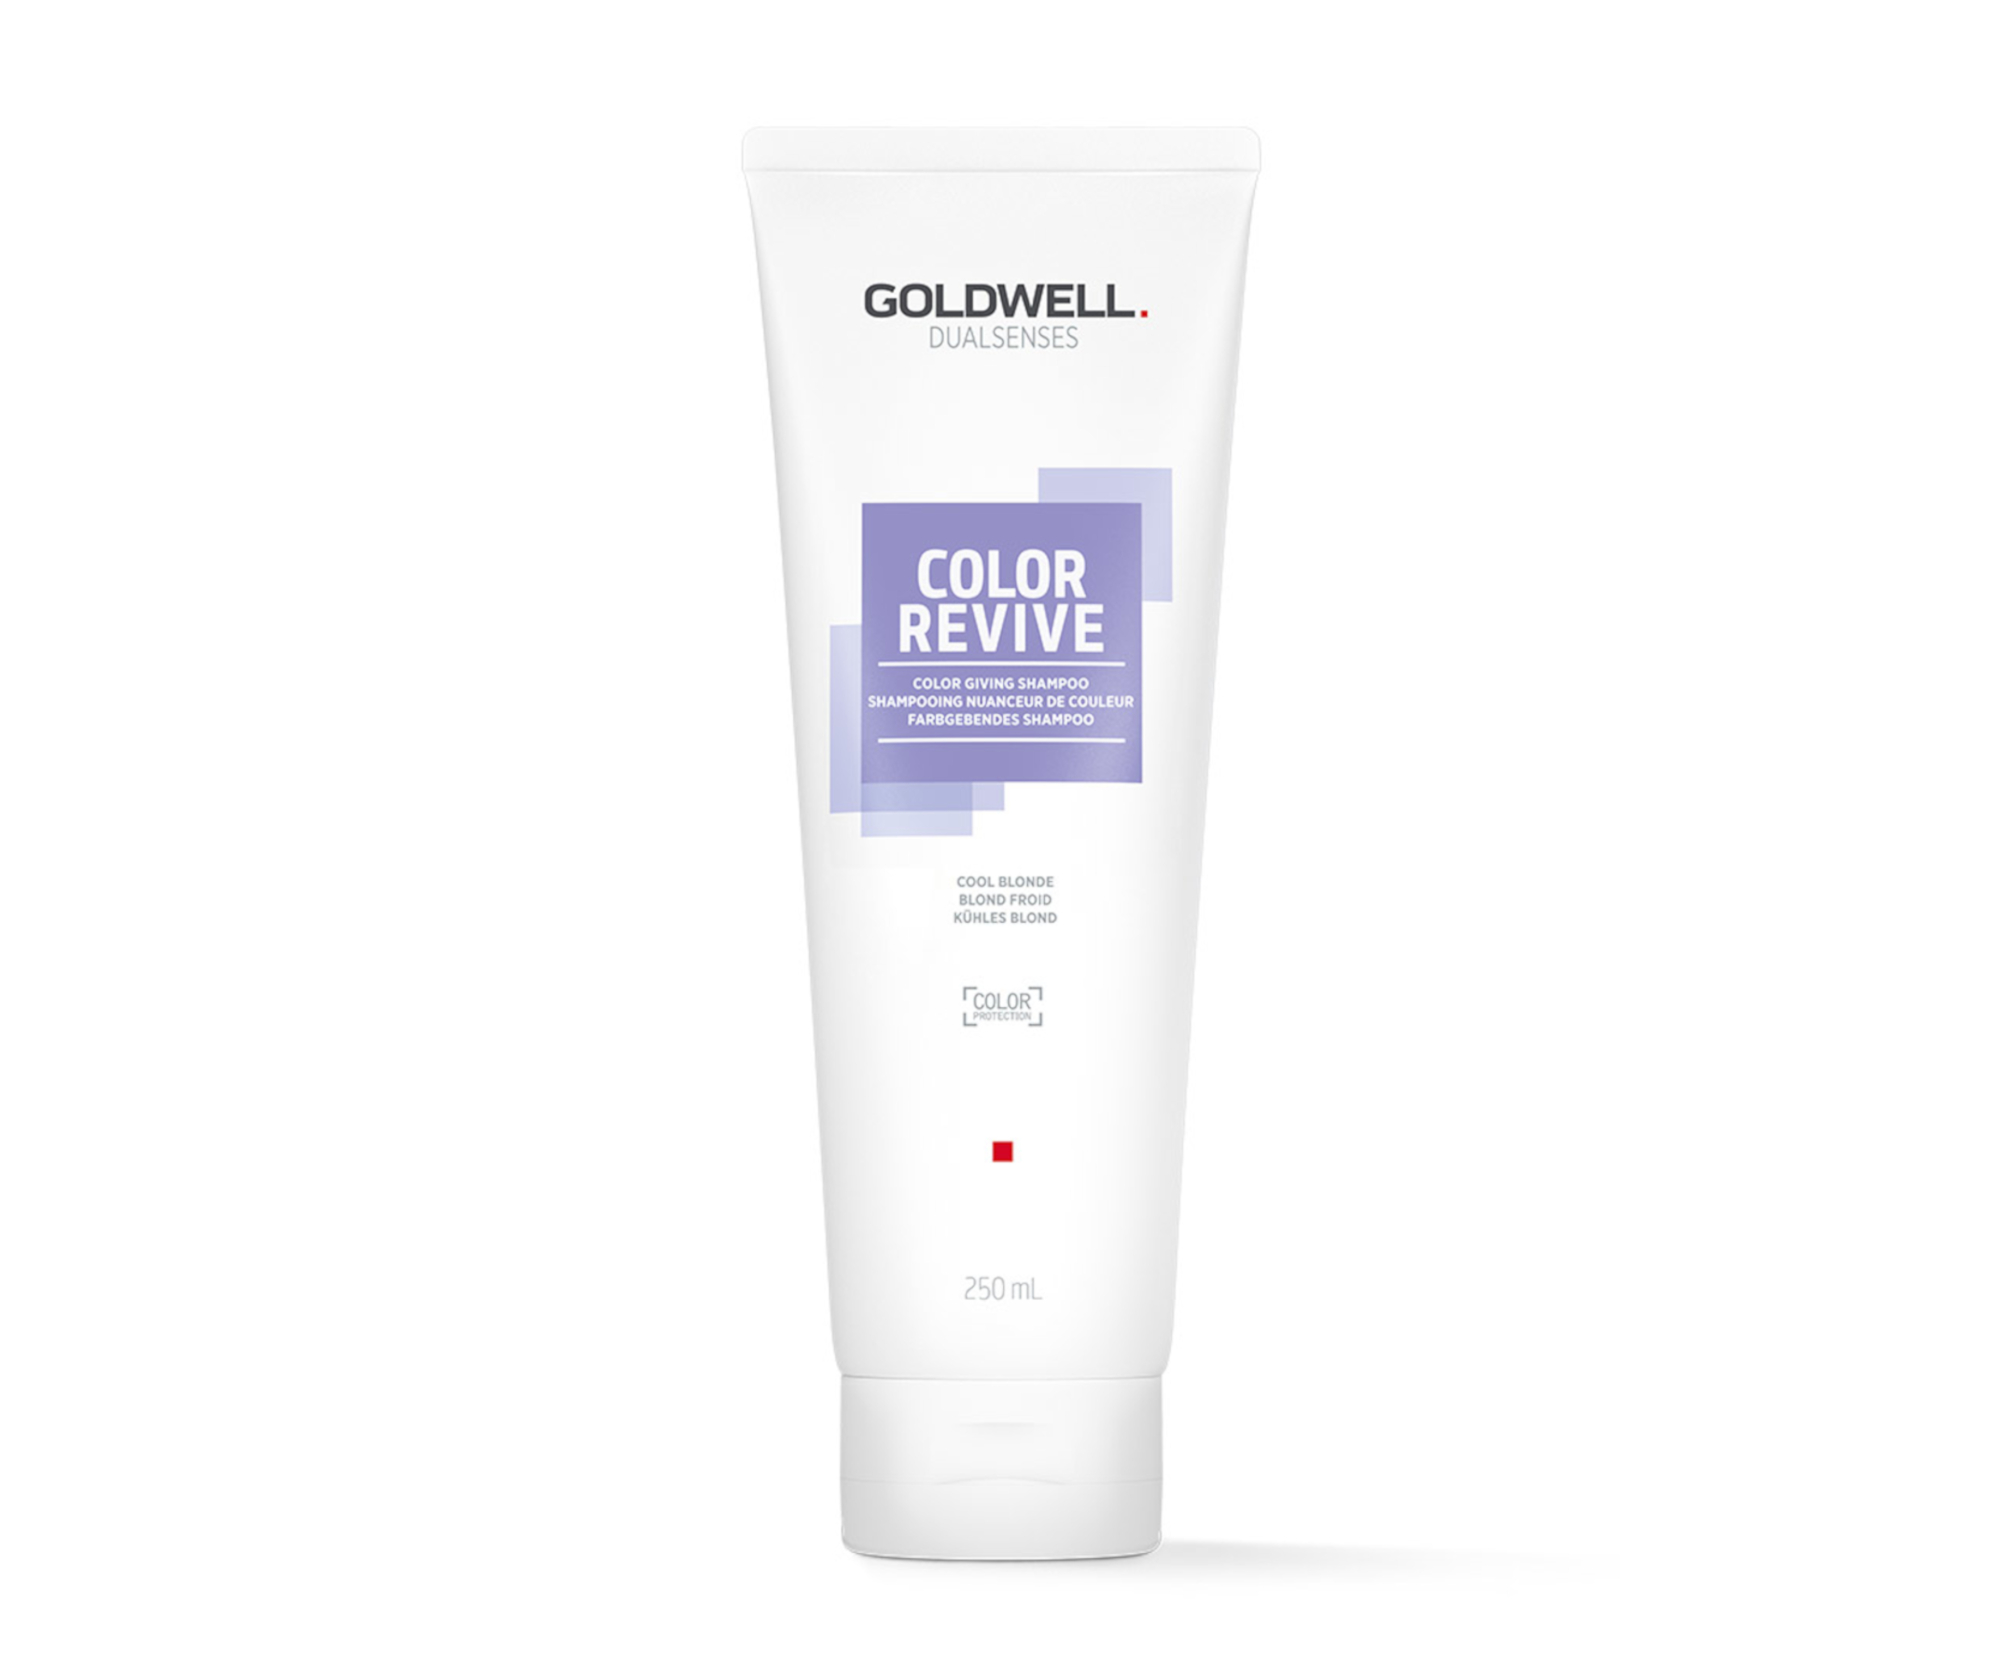 Šampon pro oživení barvy vlasů Goldwell Color Revive - 250 ml, studená blond (202991) + DÁREK ZDARMA